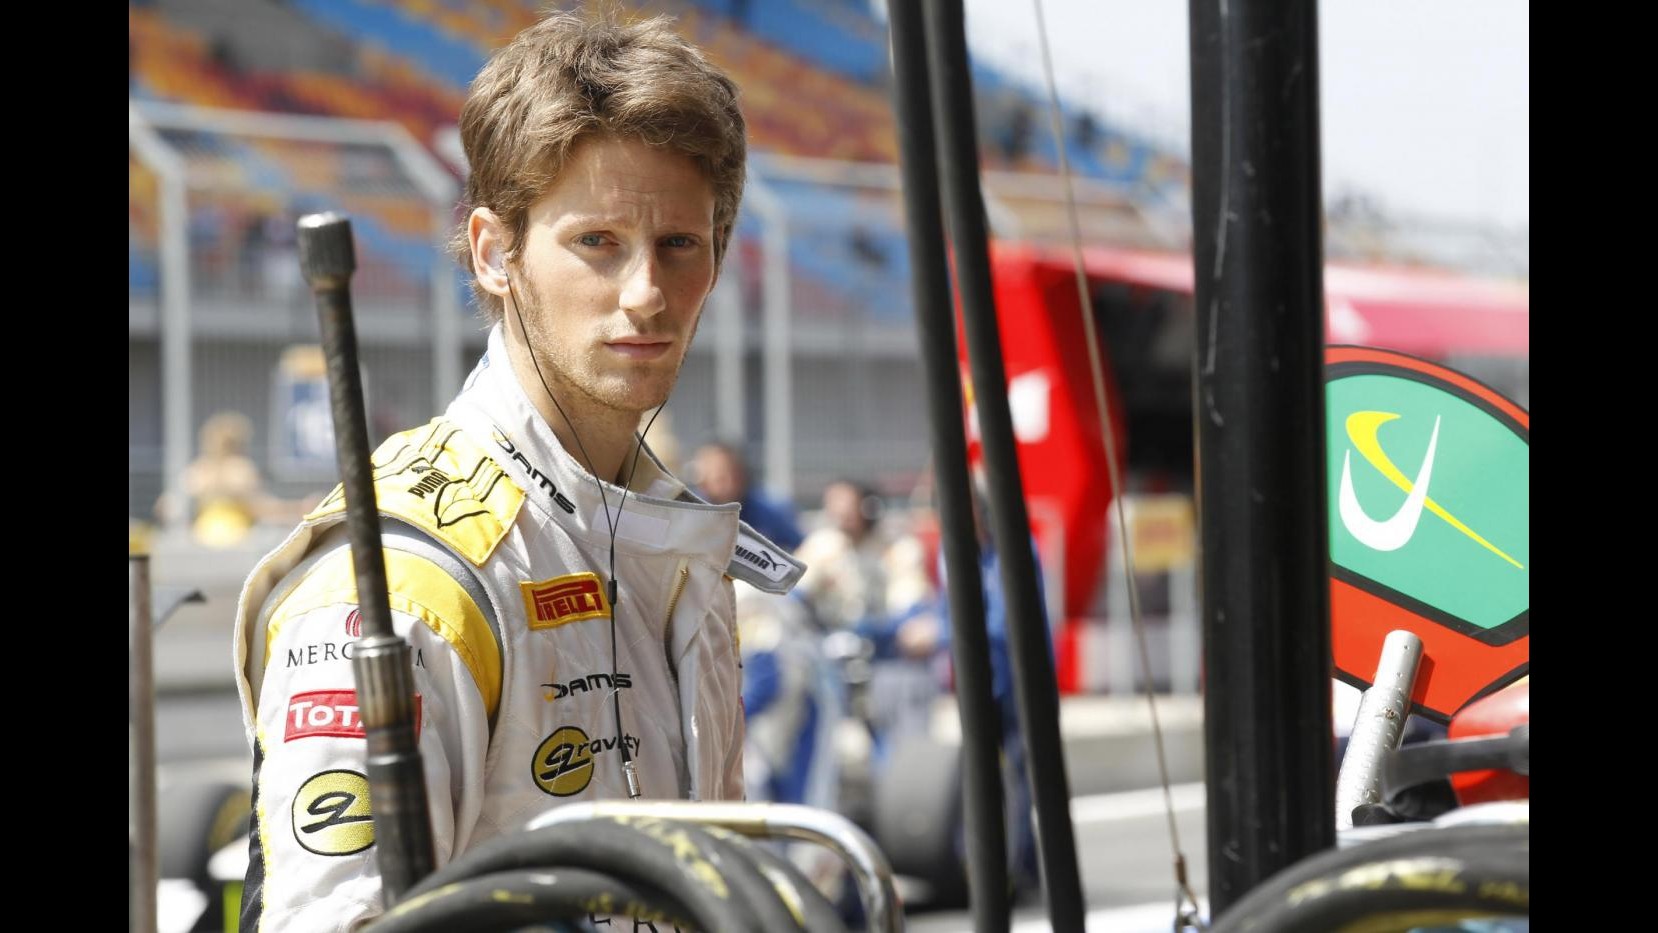 F1, Lotus Renault ingaggia francese Grosjean per mondiale 2012